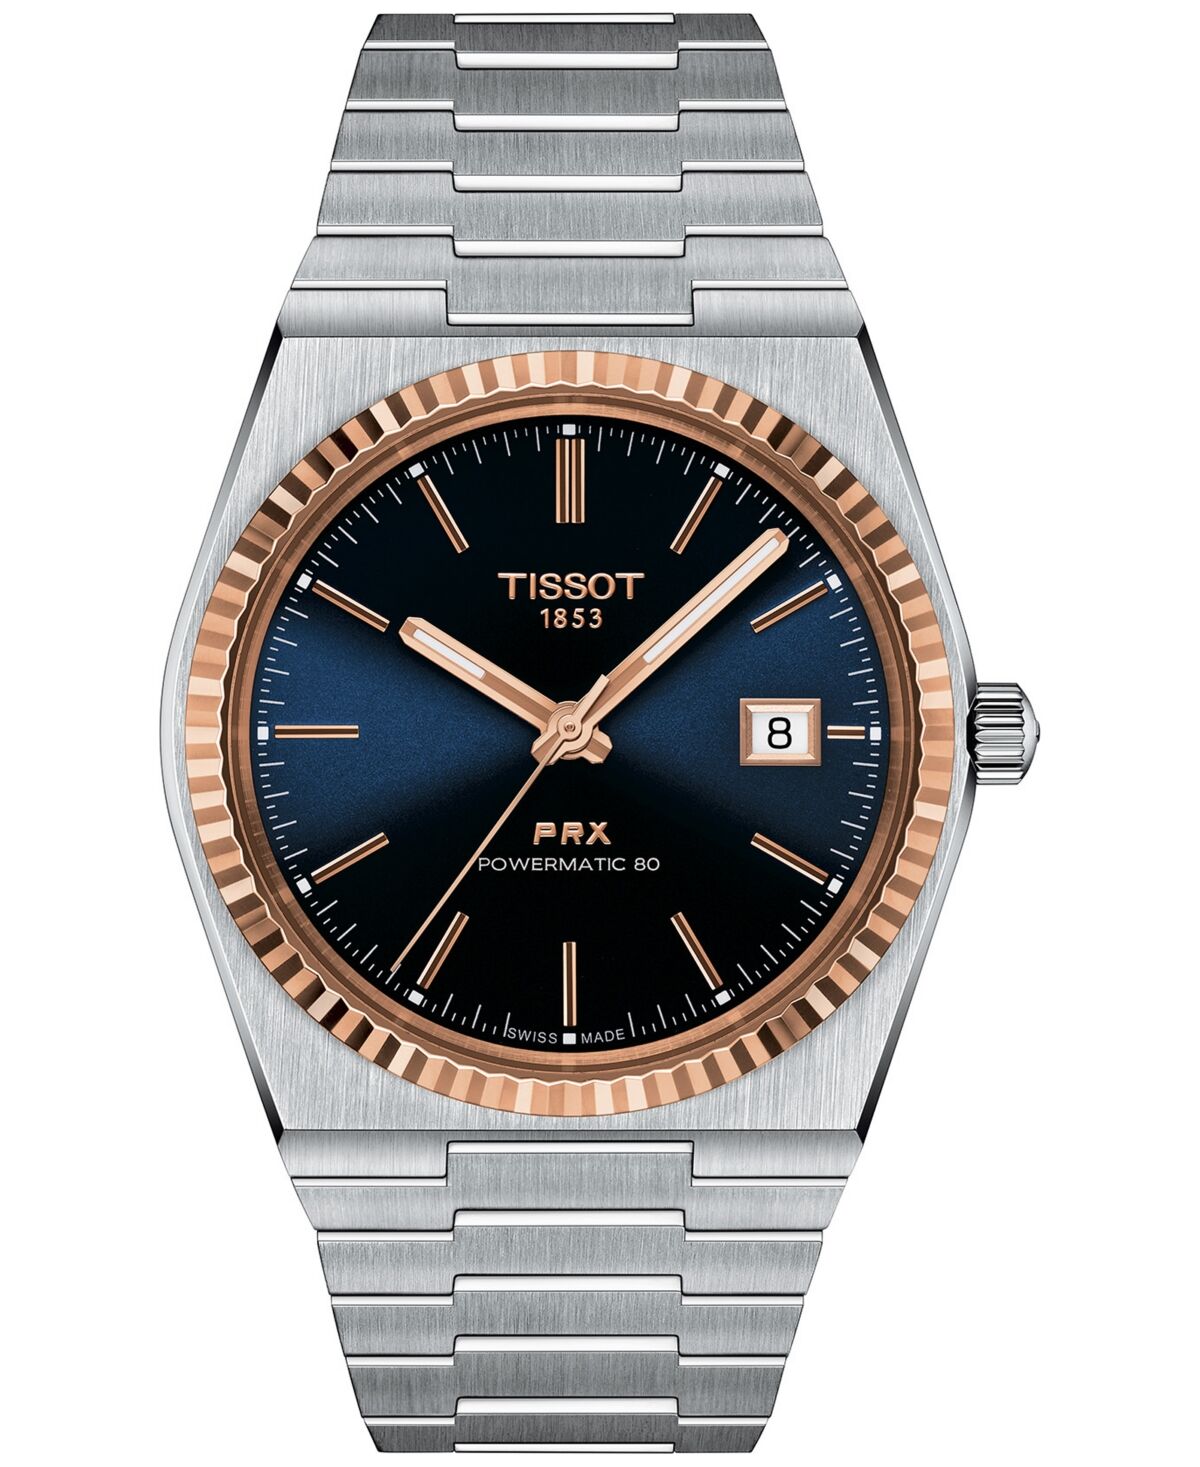 Tissot Men's Prx Powermatic 80 Automatic Stainless Steel Bracelet Watch 40mm - Silver